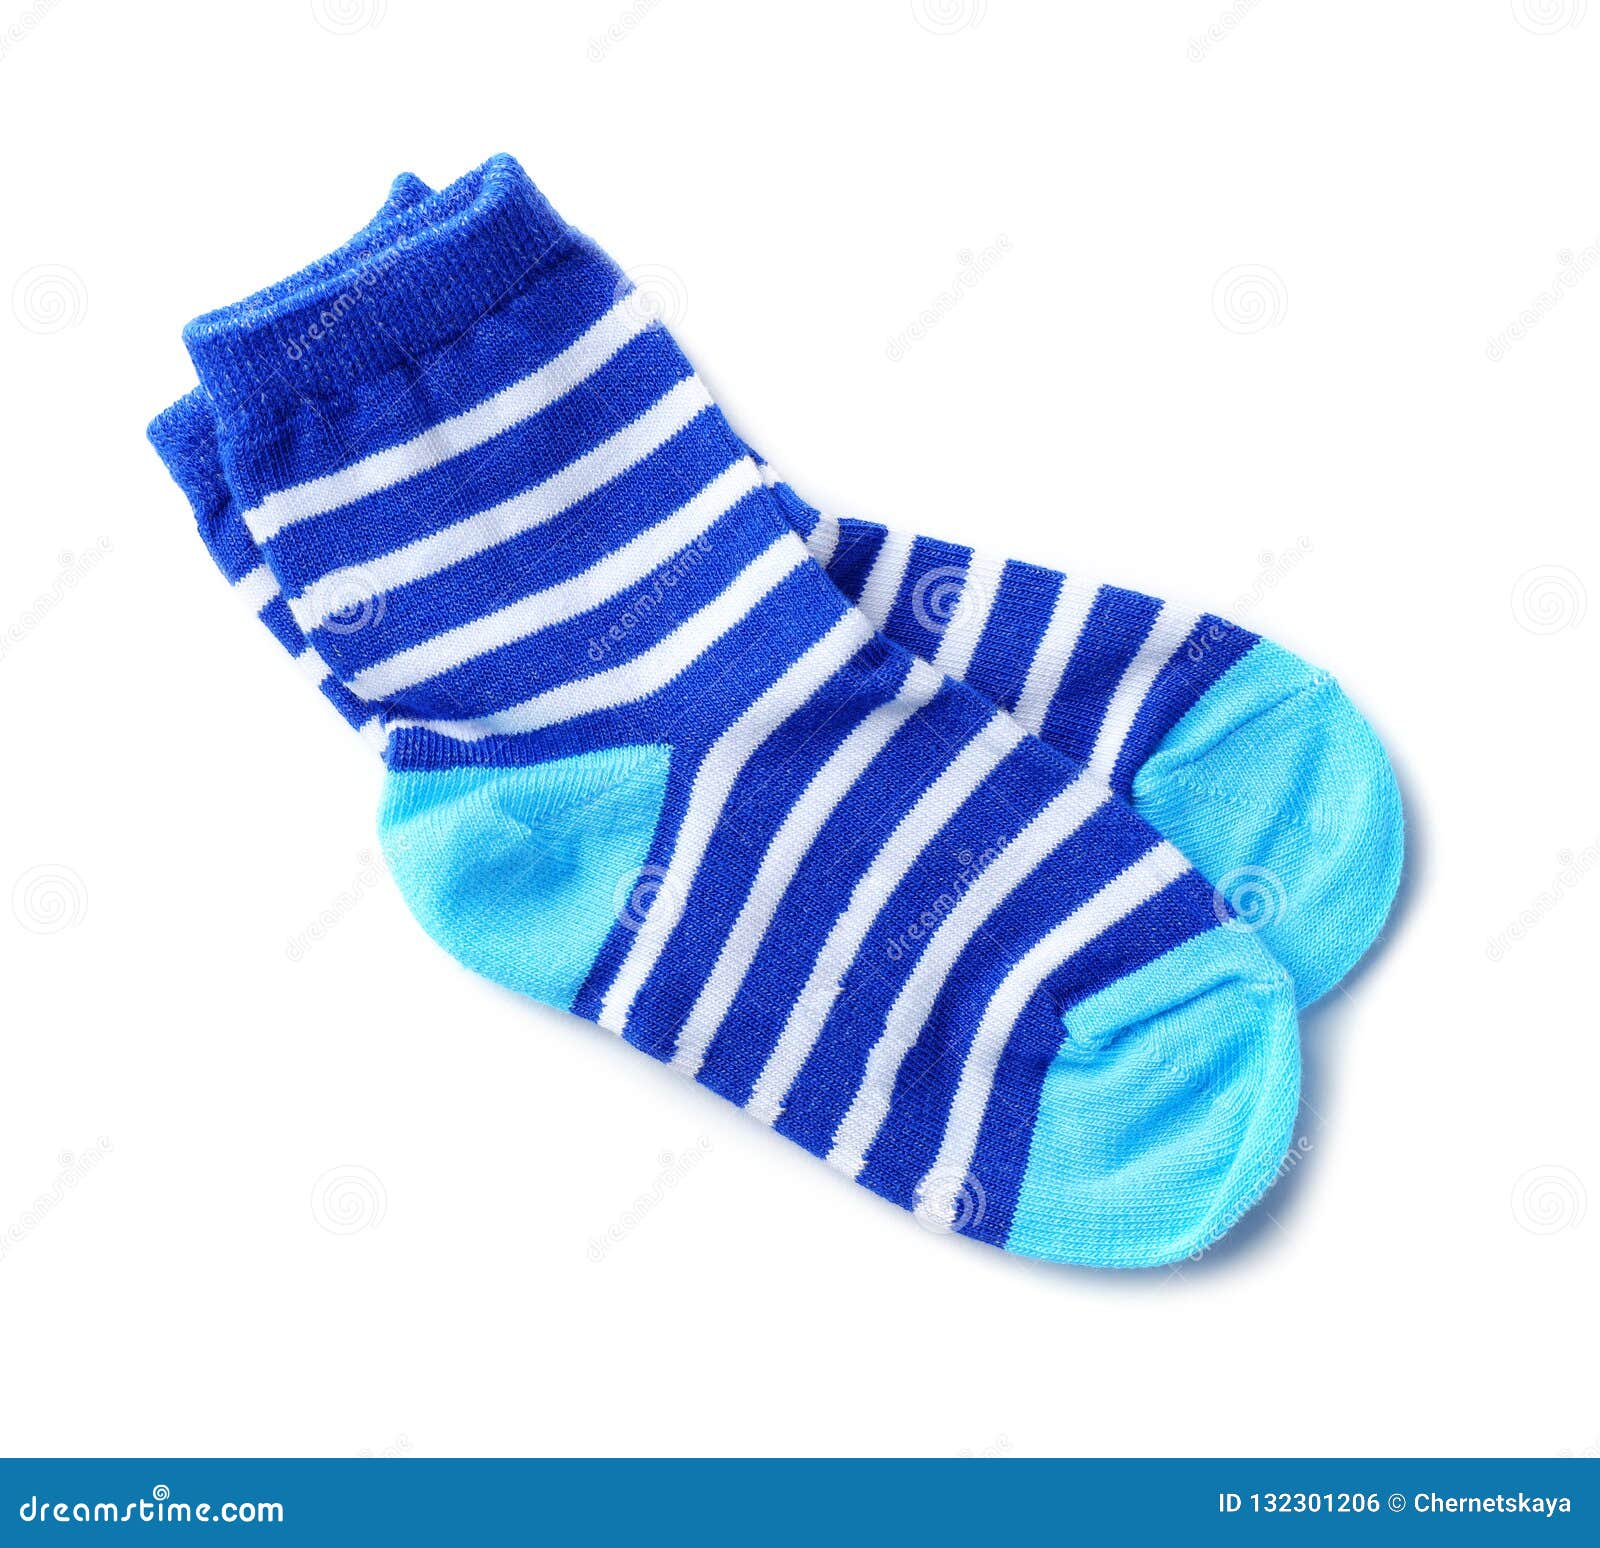 Cute Child Socks on White Background Stock Photo - Image of pattern ...